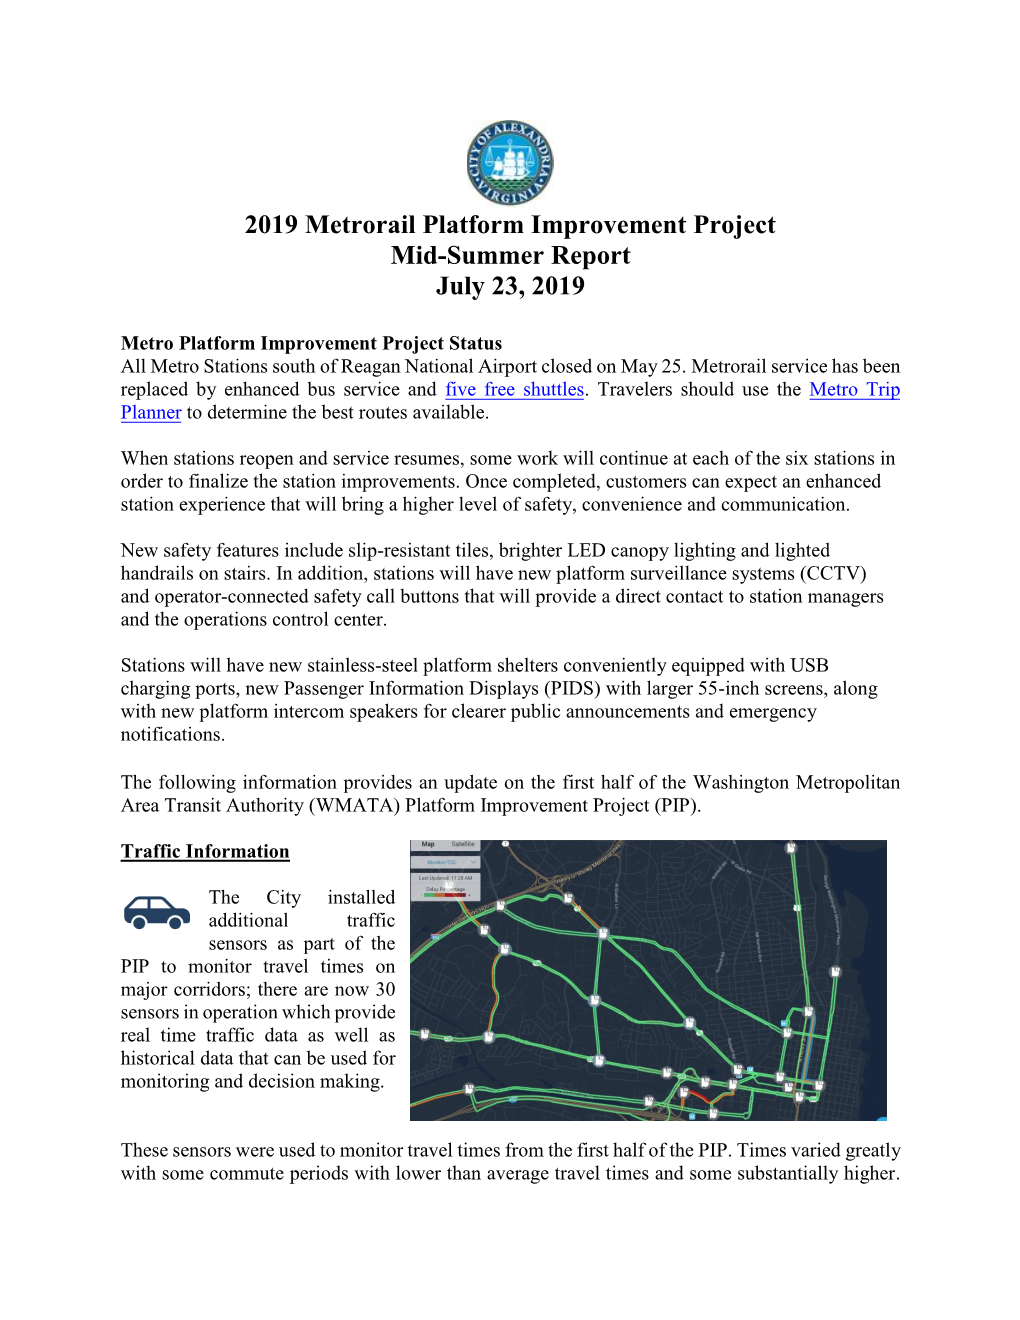 2019 Metrorail Platform Improvement Project Mid-Summer Report July 23, 2019